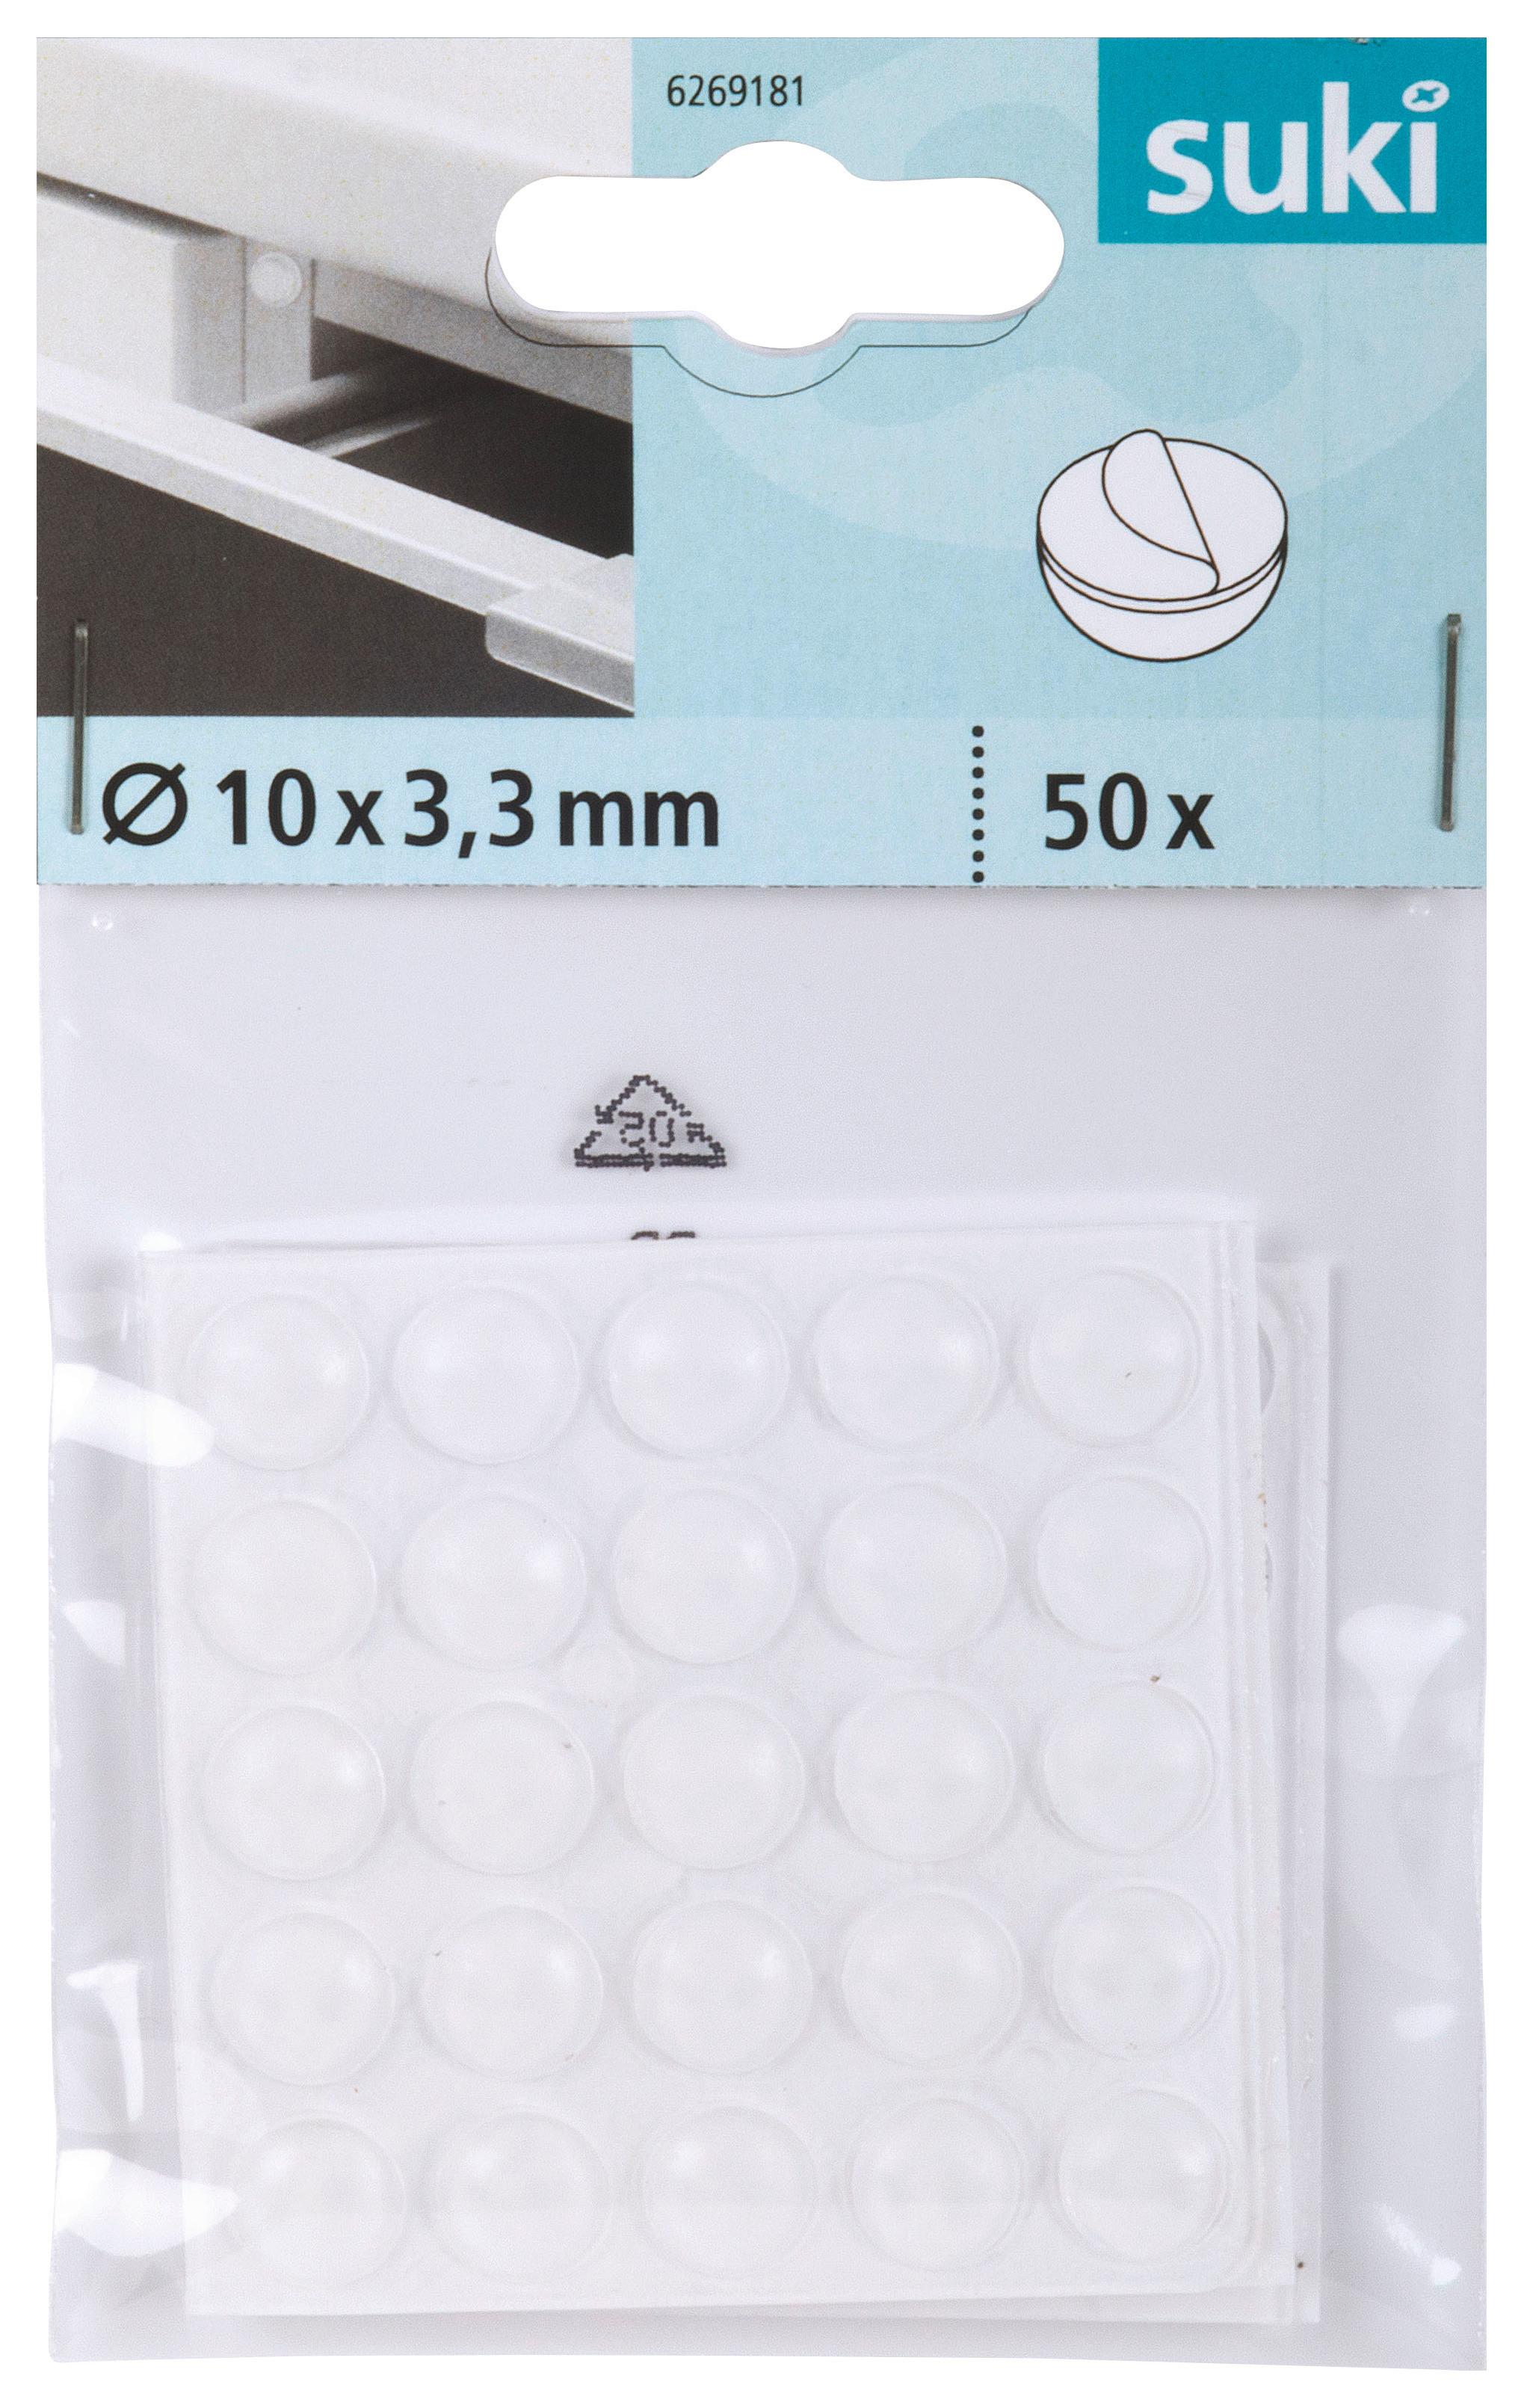 Schutzpuffer Transparent 50 Stk. Ø 10 mm, Selbstklebend - Transparent, Kunststoff (1/0,3cm) - Suki